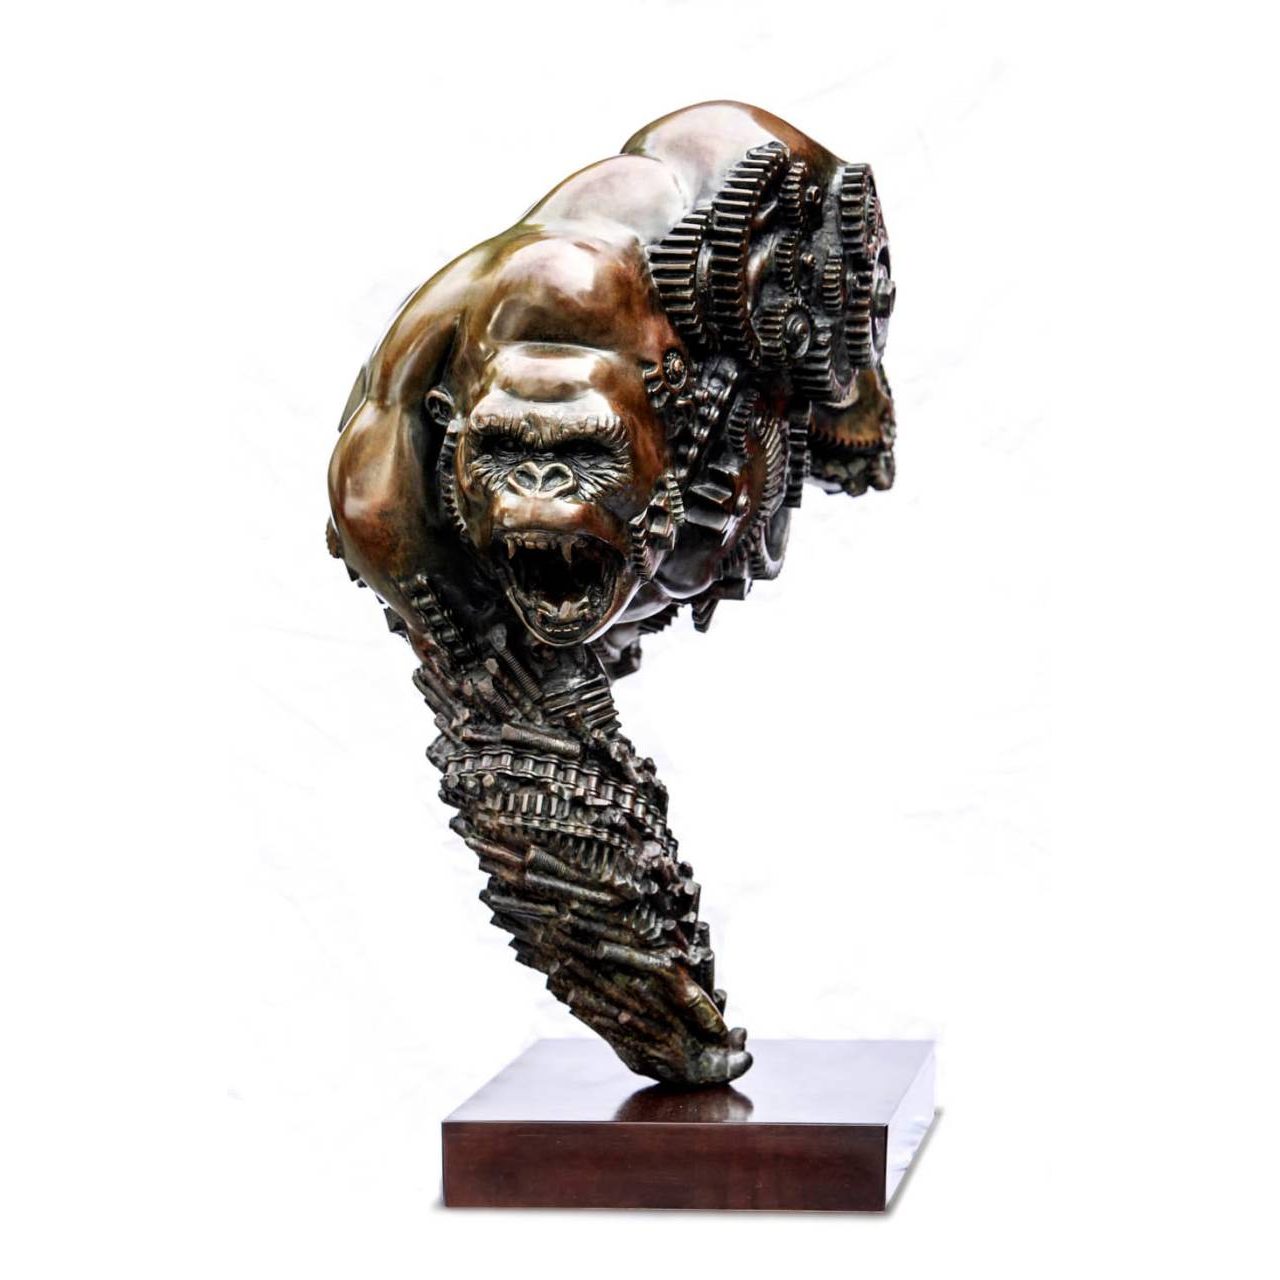 Thierry BENENATI, Gare au Gorille, bronze, 70 x 40 x 67 cm